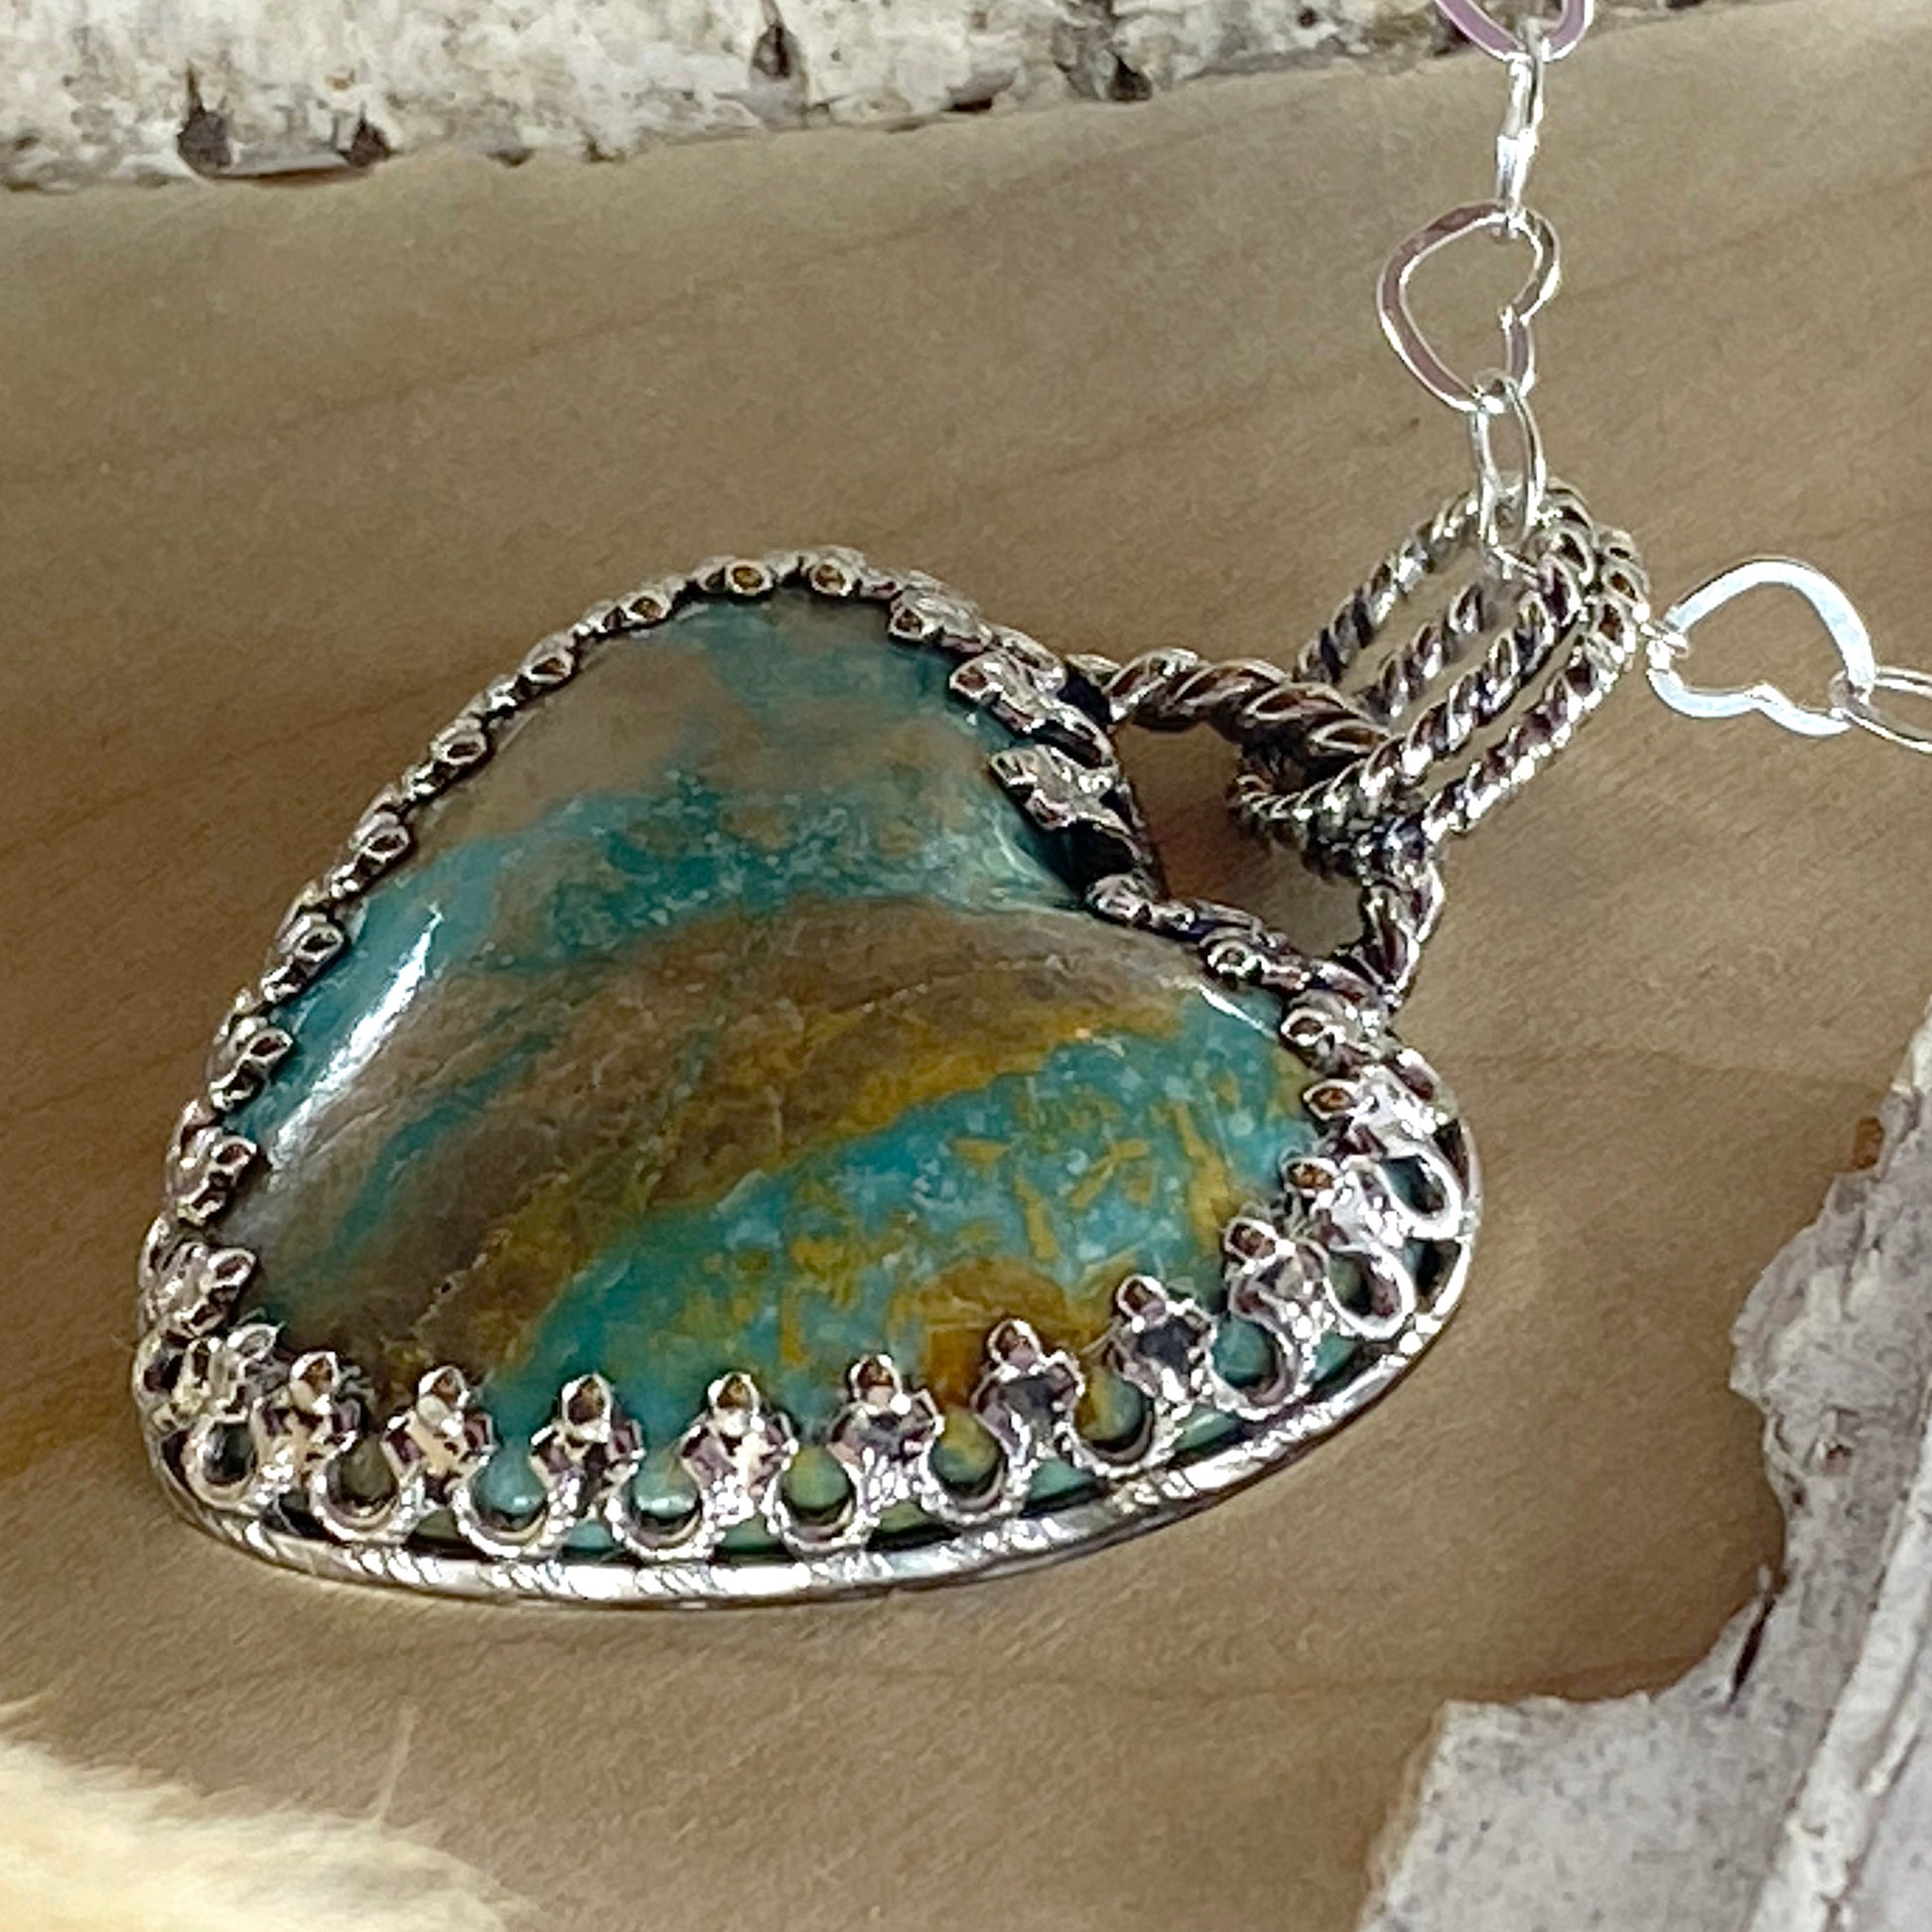 Kingman Turquoise Pendant Necklace - Stone Treasures by the Lake